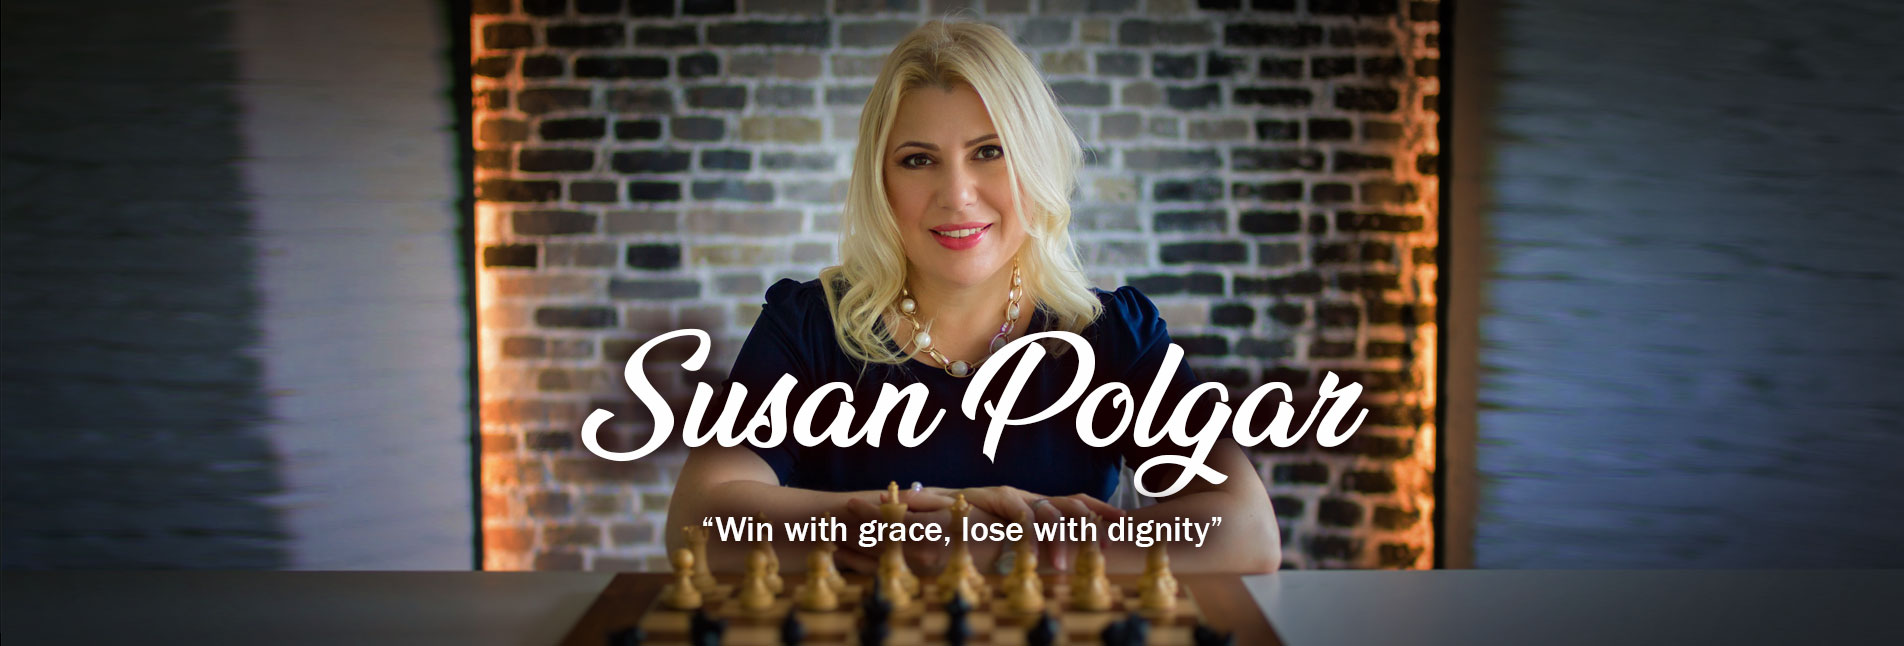 Chess Daily News by Susan Polgar Live Ratings Archives - Page 7 of 20 -  Chess Daily News by Susan Polgar